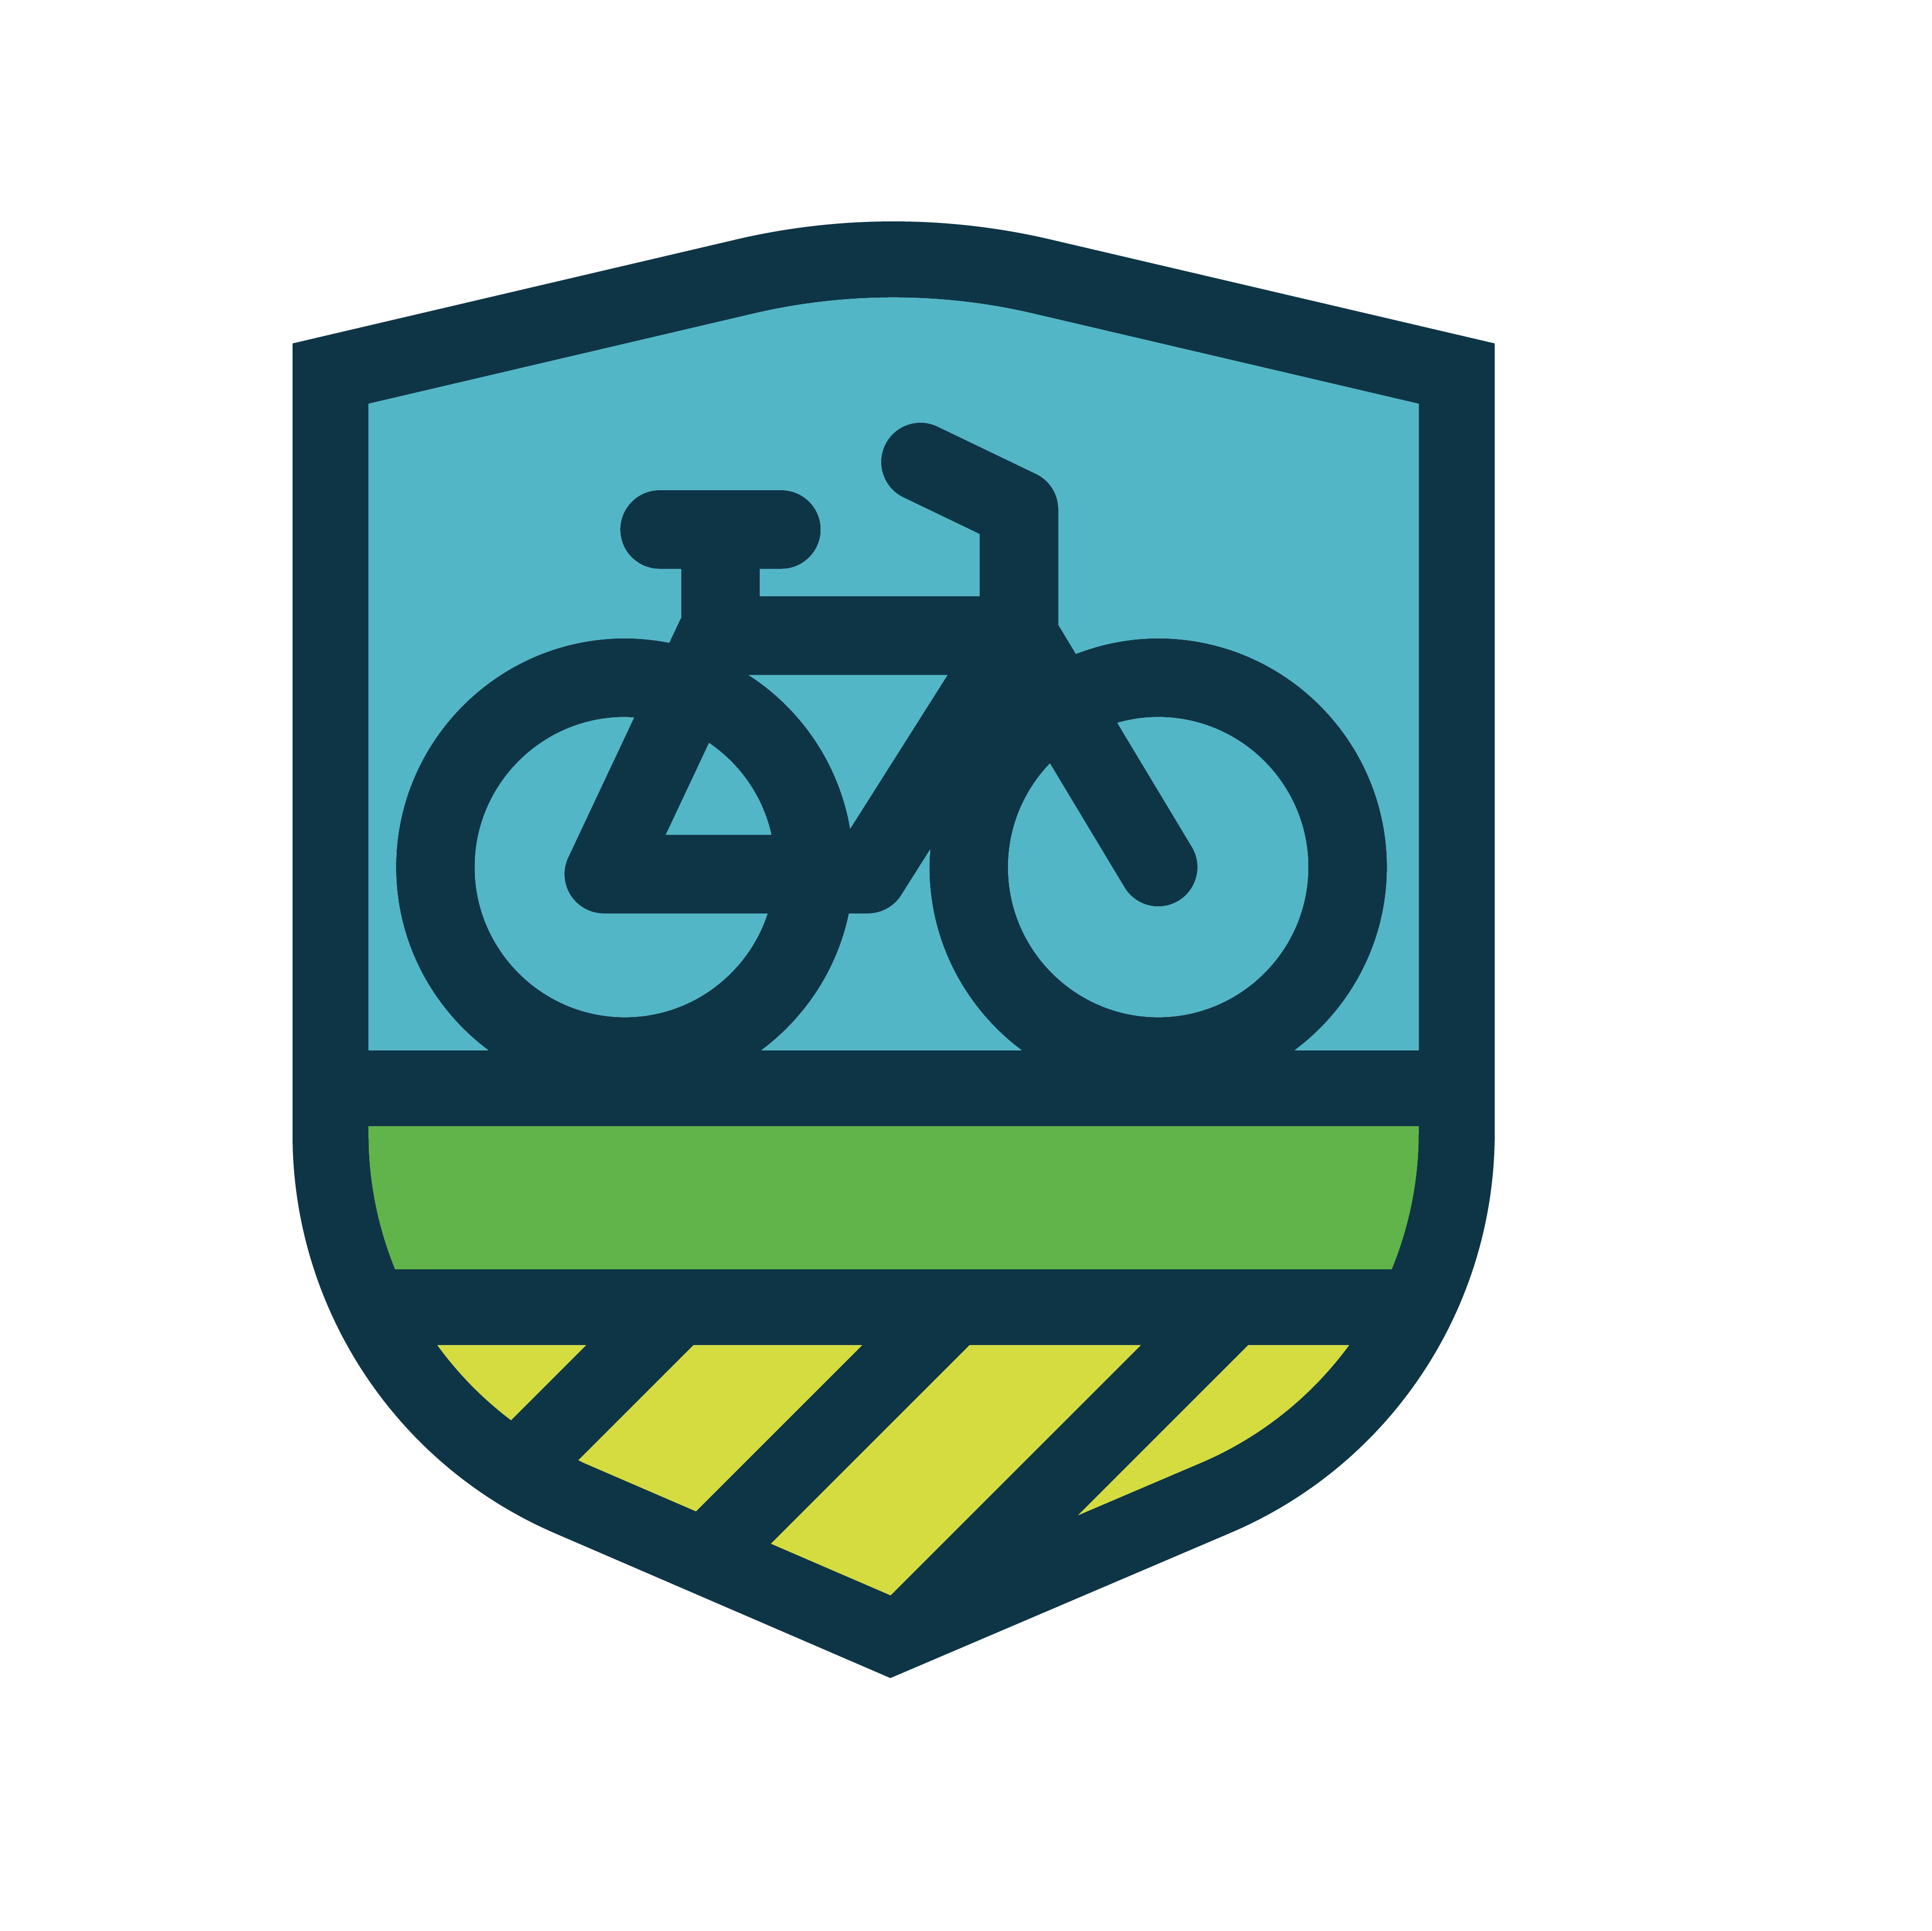 Bikeways-Logo_symbol logo design by logo designer Emspace + Lovgren for your inspiration and for the worlds largest logo competition